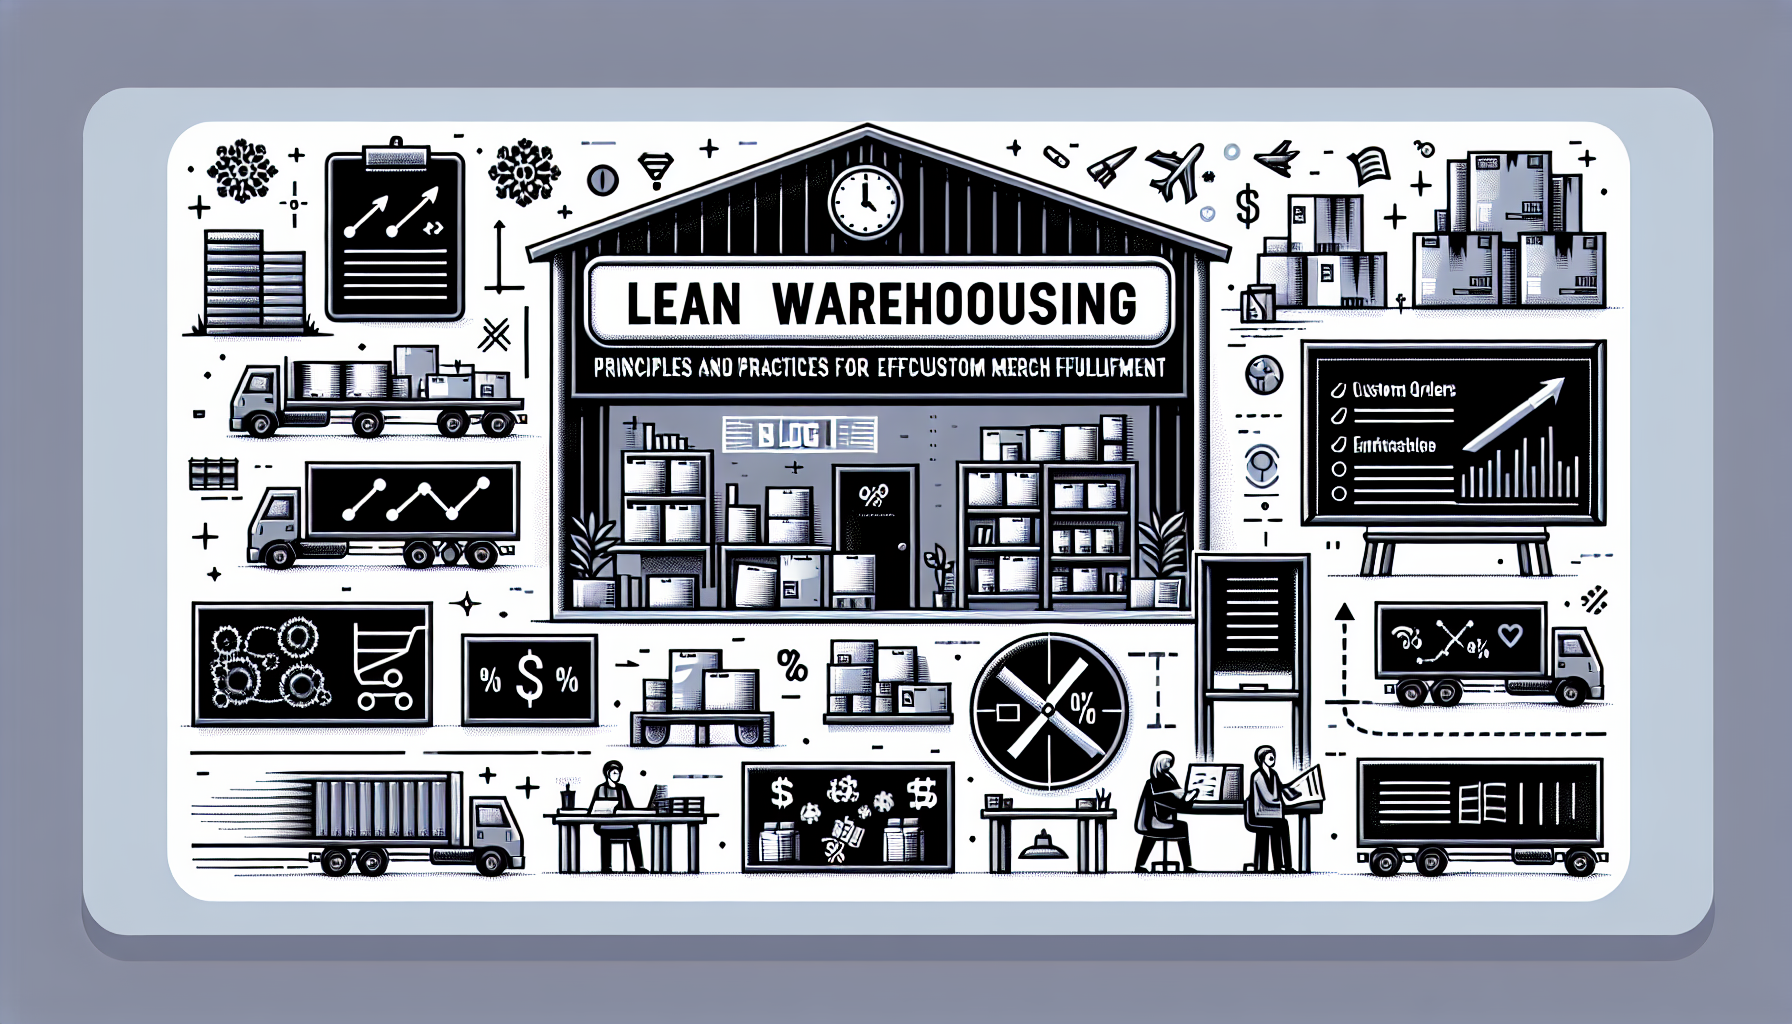 Lean warehousing